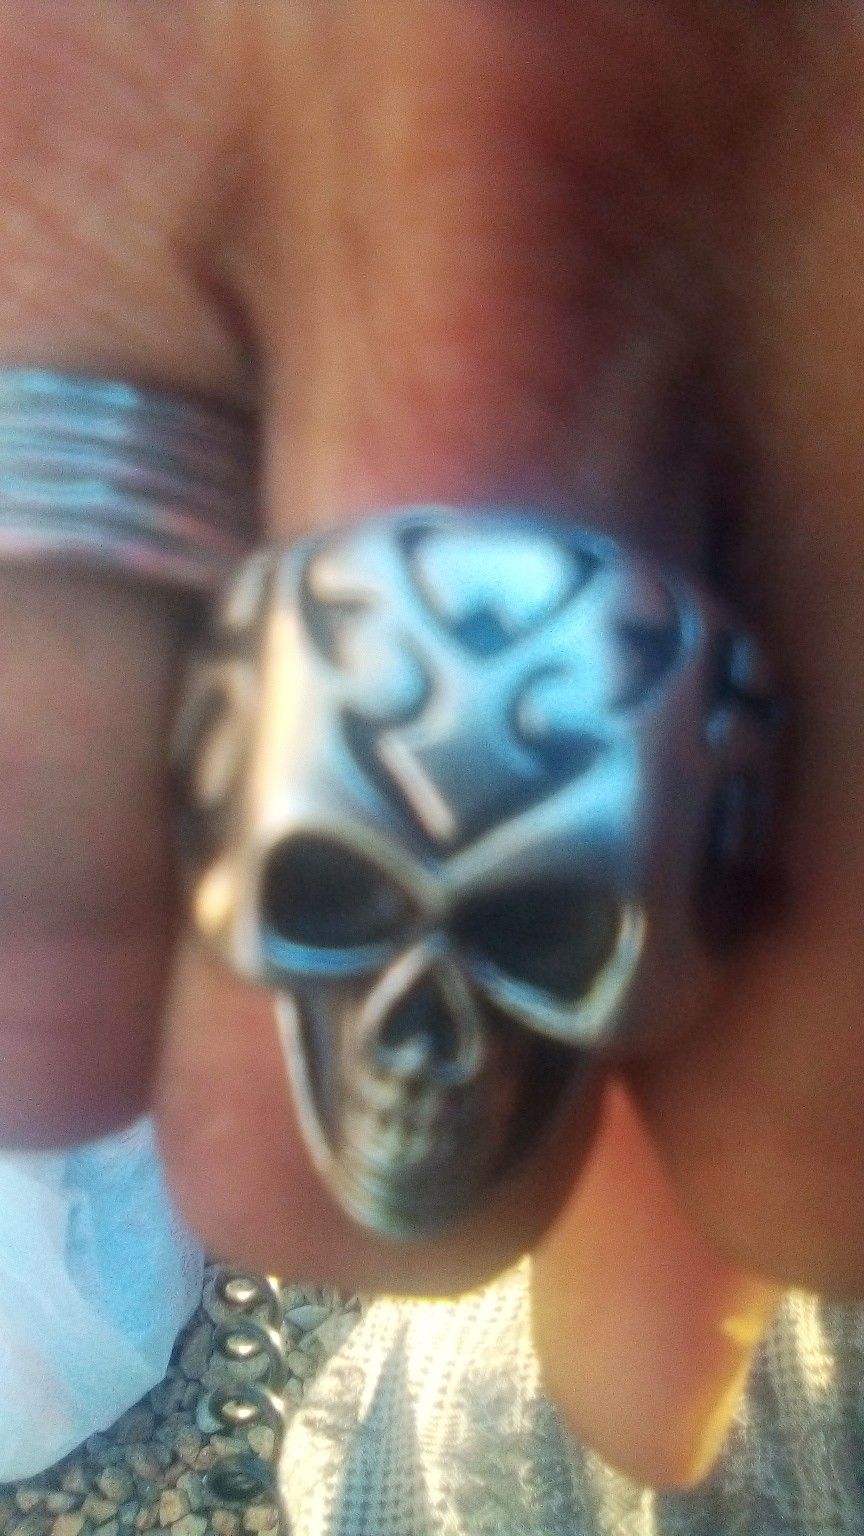 Large skull ring $20